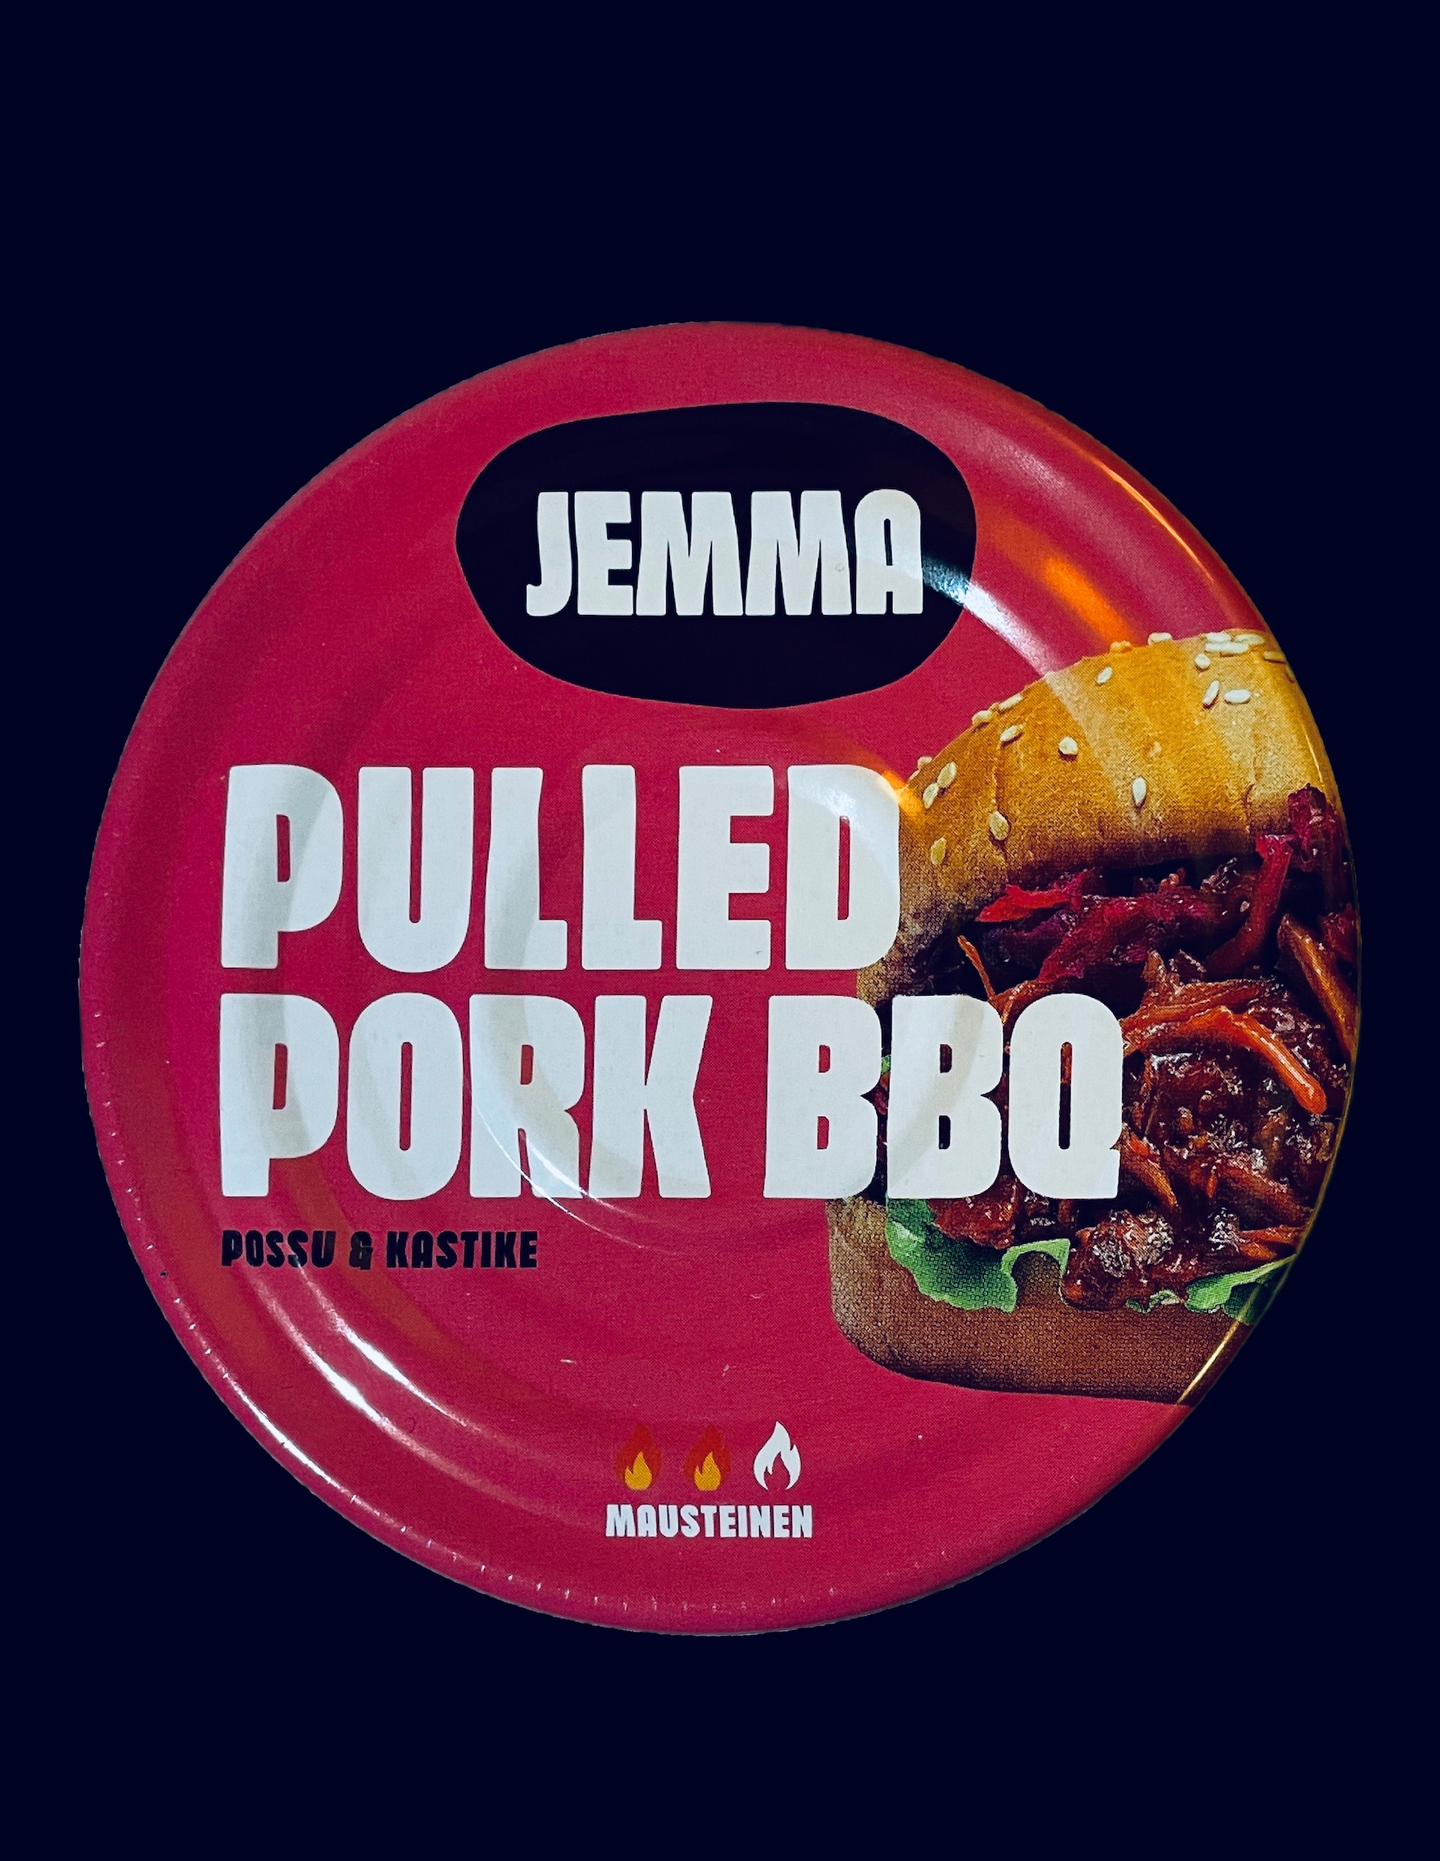 Jemma Pulled Pork BBQ nyhtöpossua kastikkeessa 210g